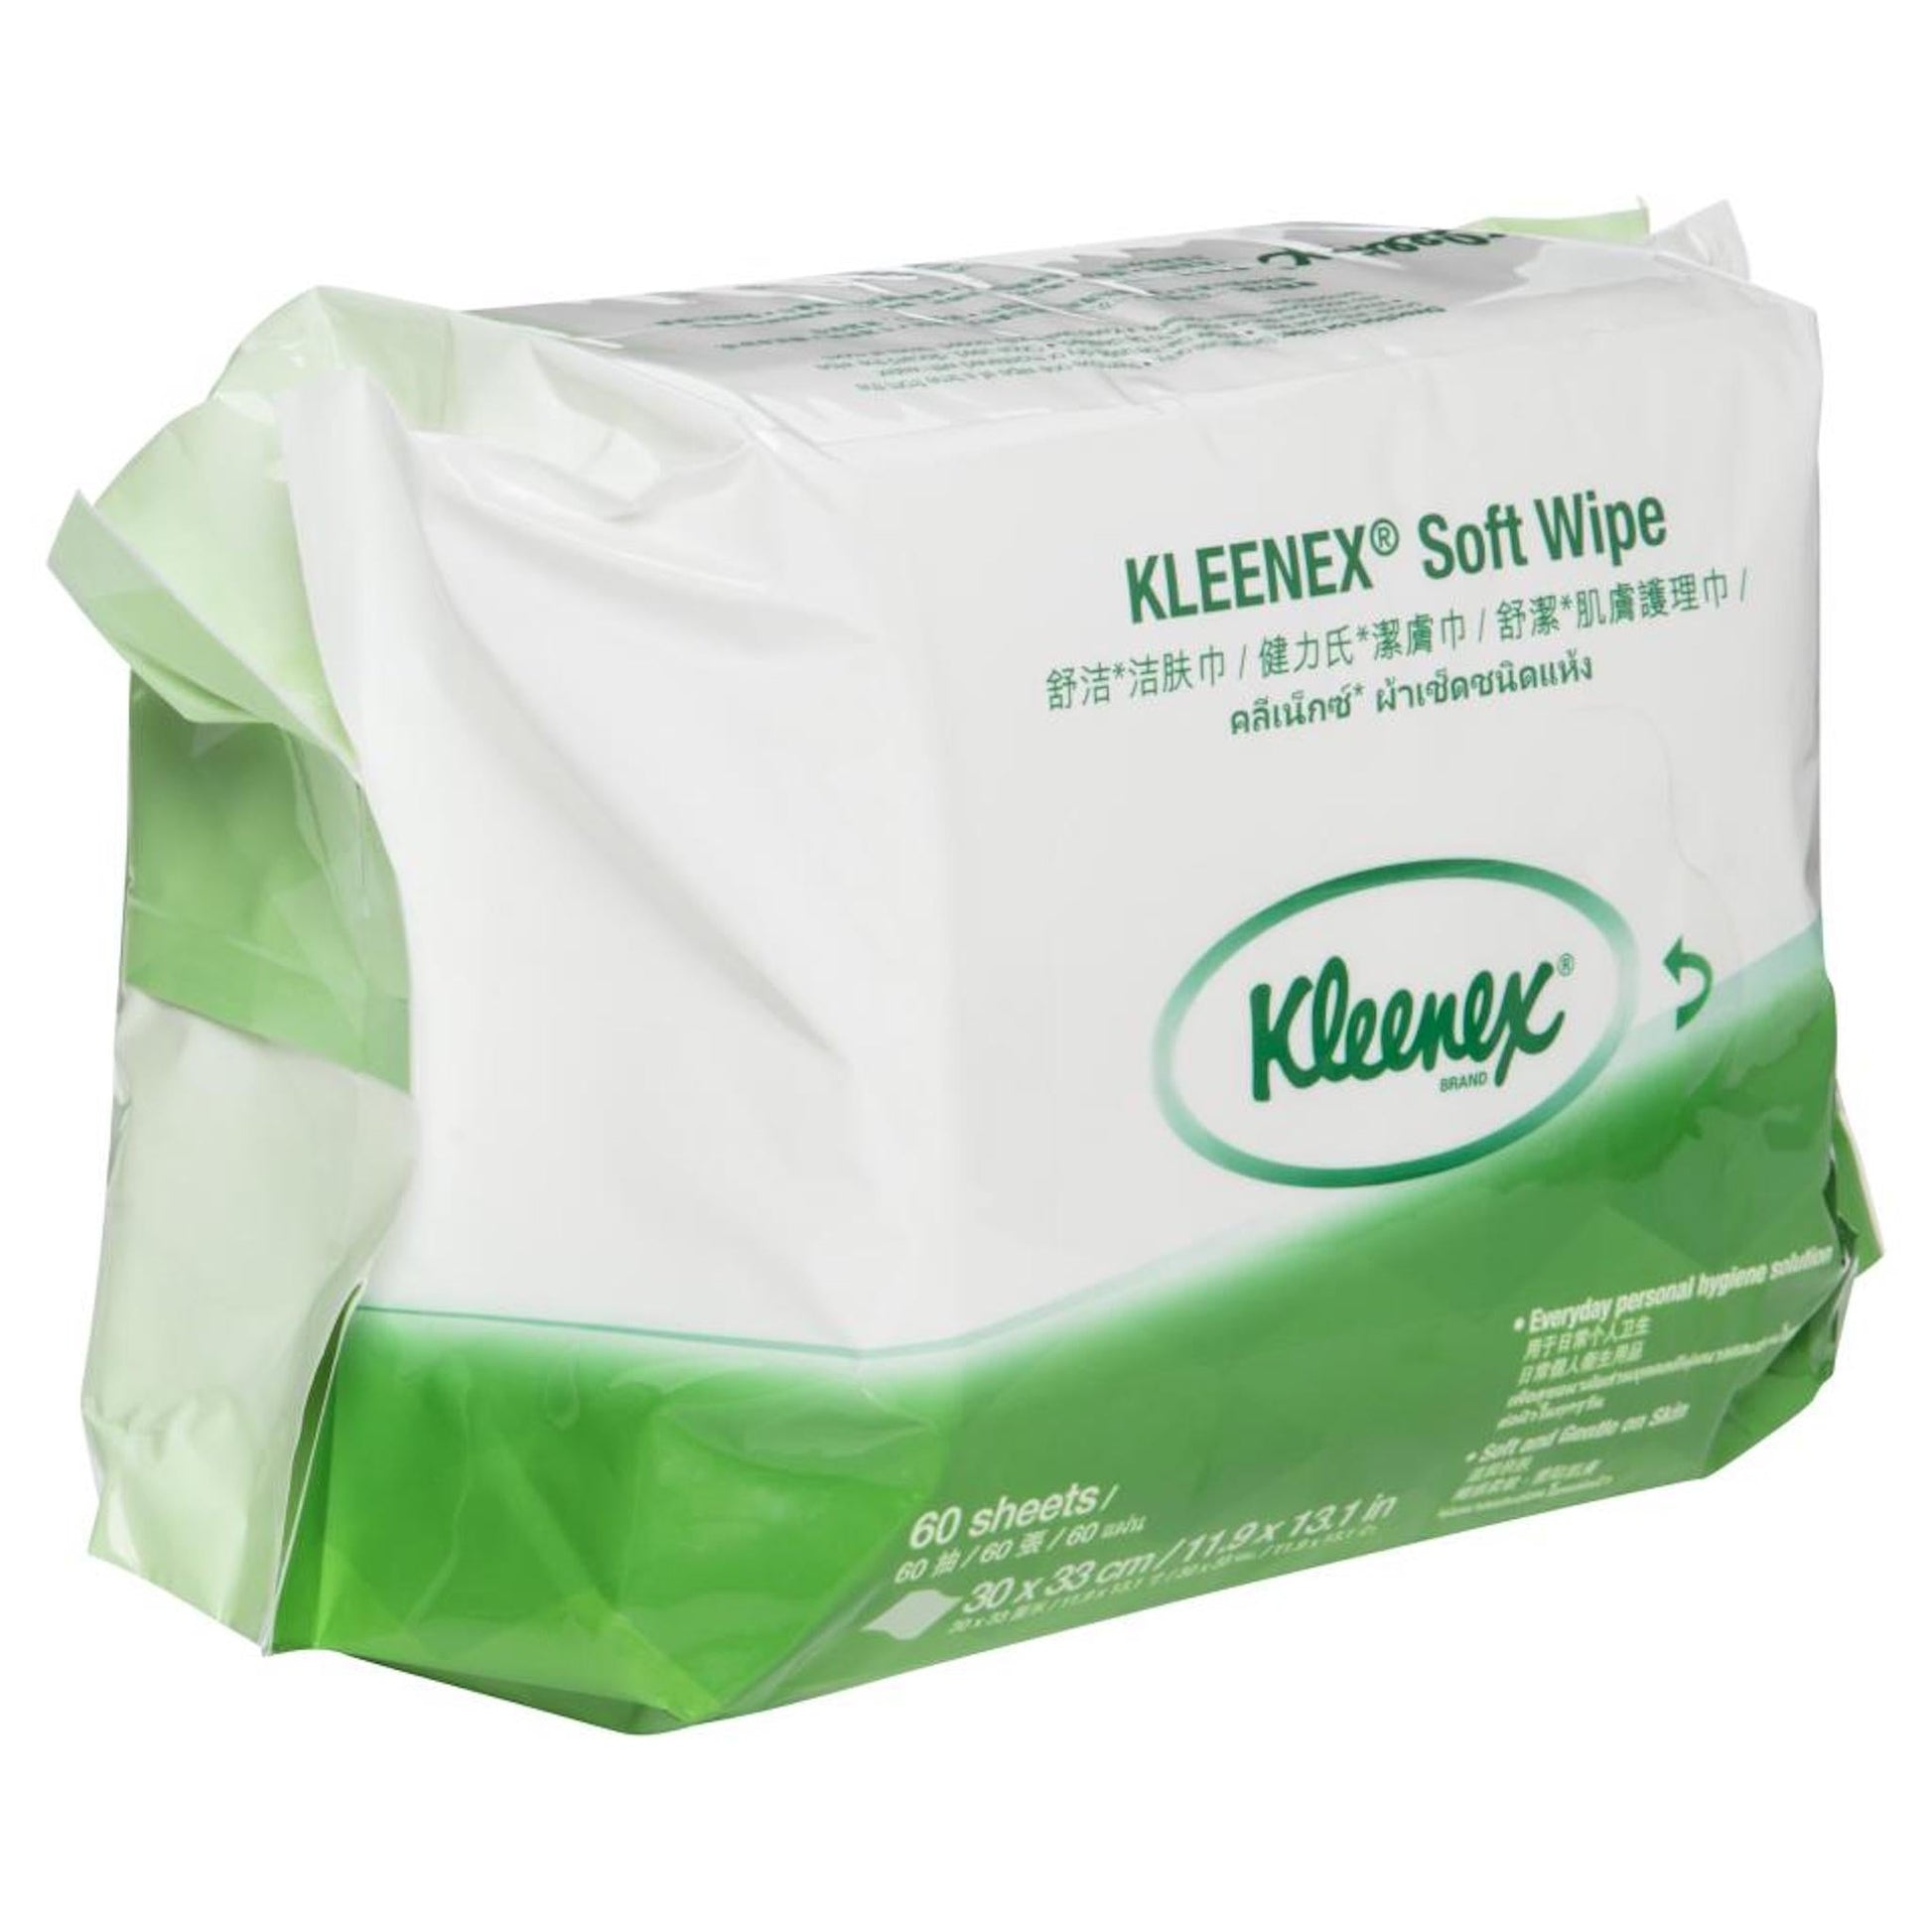 Kleenex 94127 Large Soft Patient Wipes Pack (60pc)